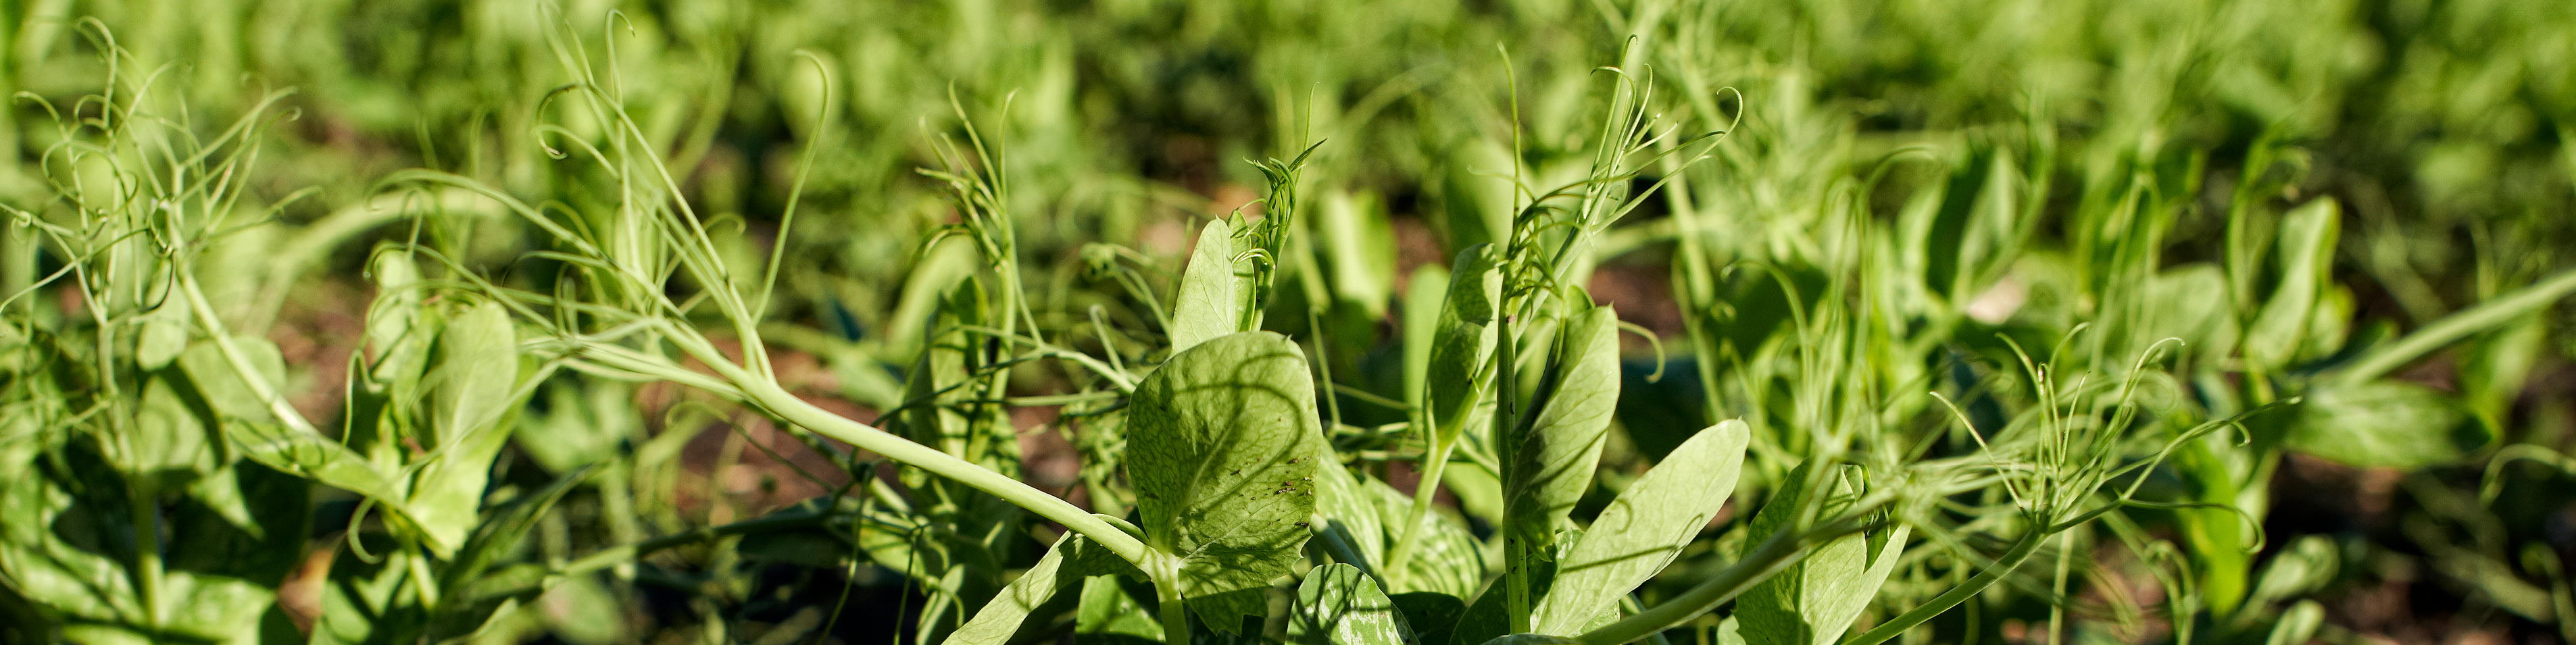 close up of pea crop